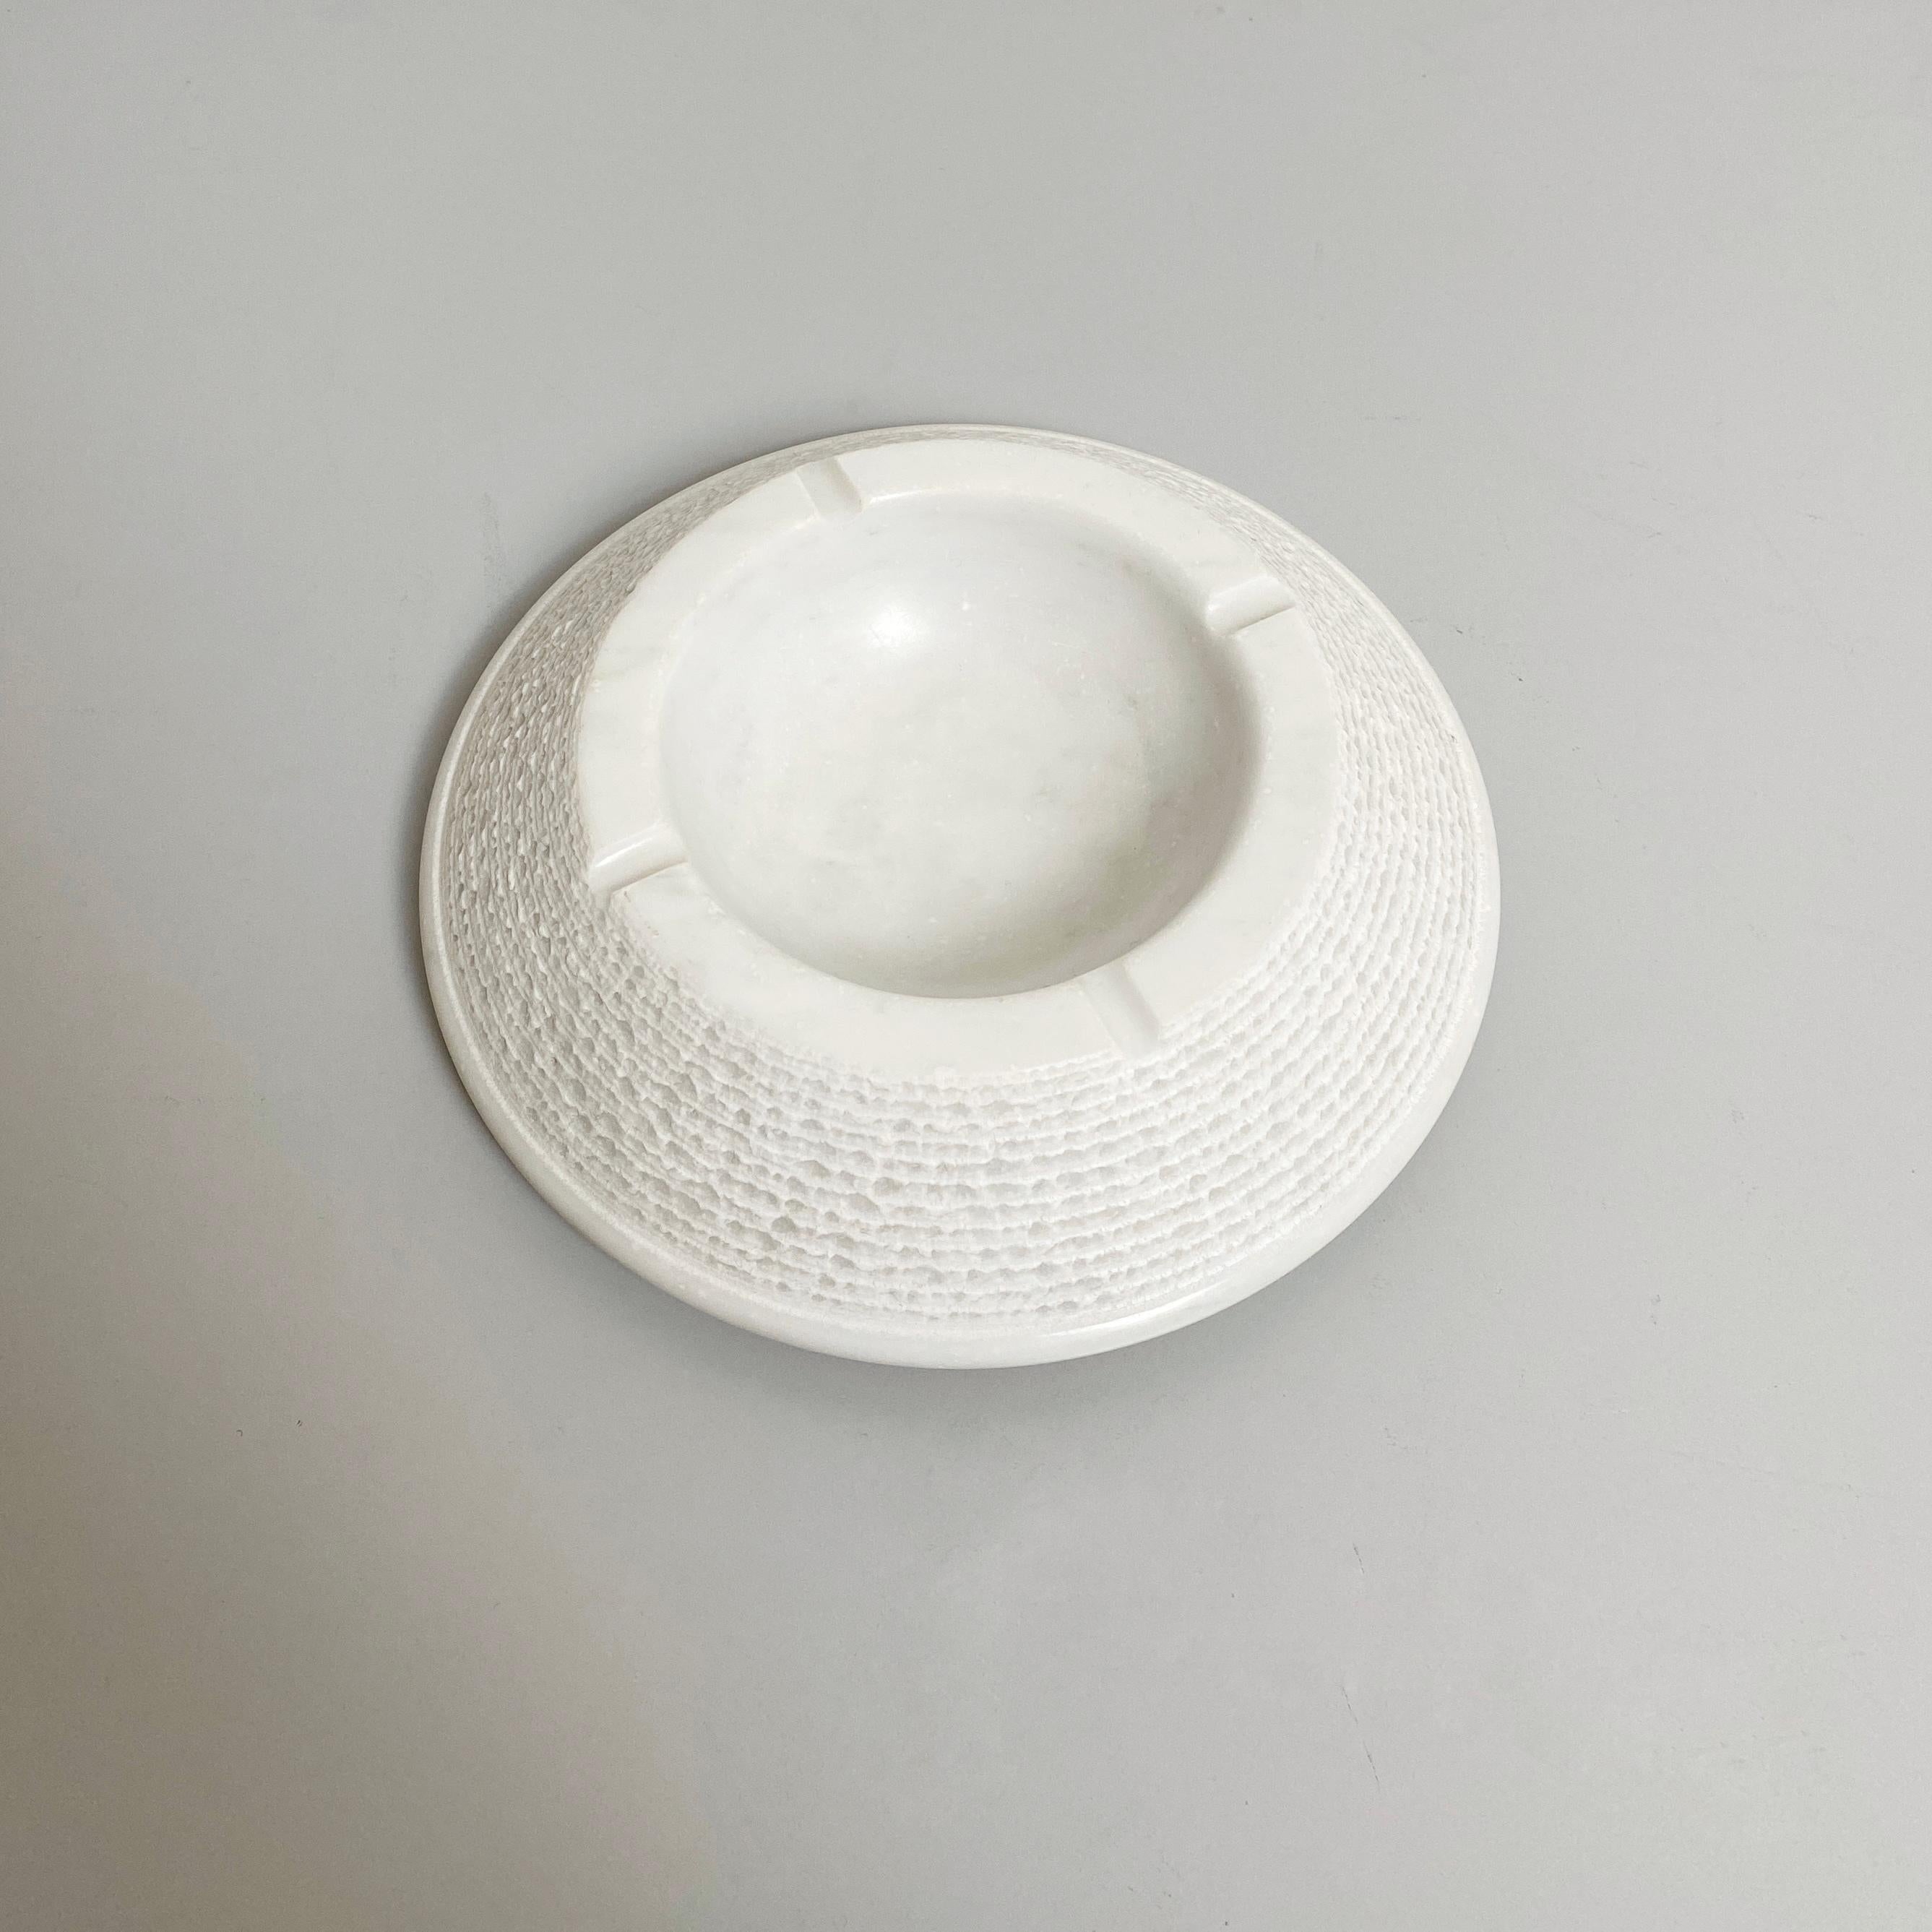 Late 20th Century Italian Mid-Century Modern Truncated Cone White Marble Ashtray, 1970s